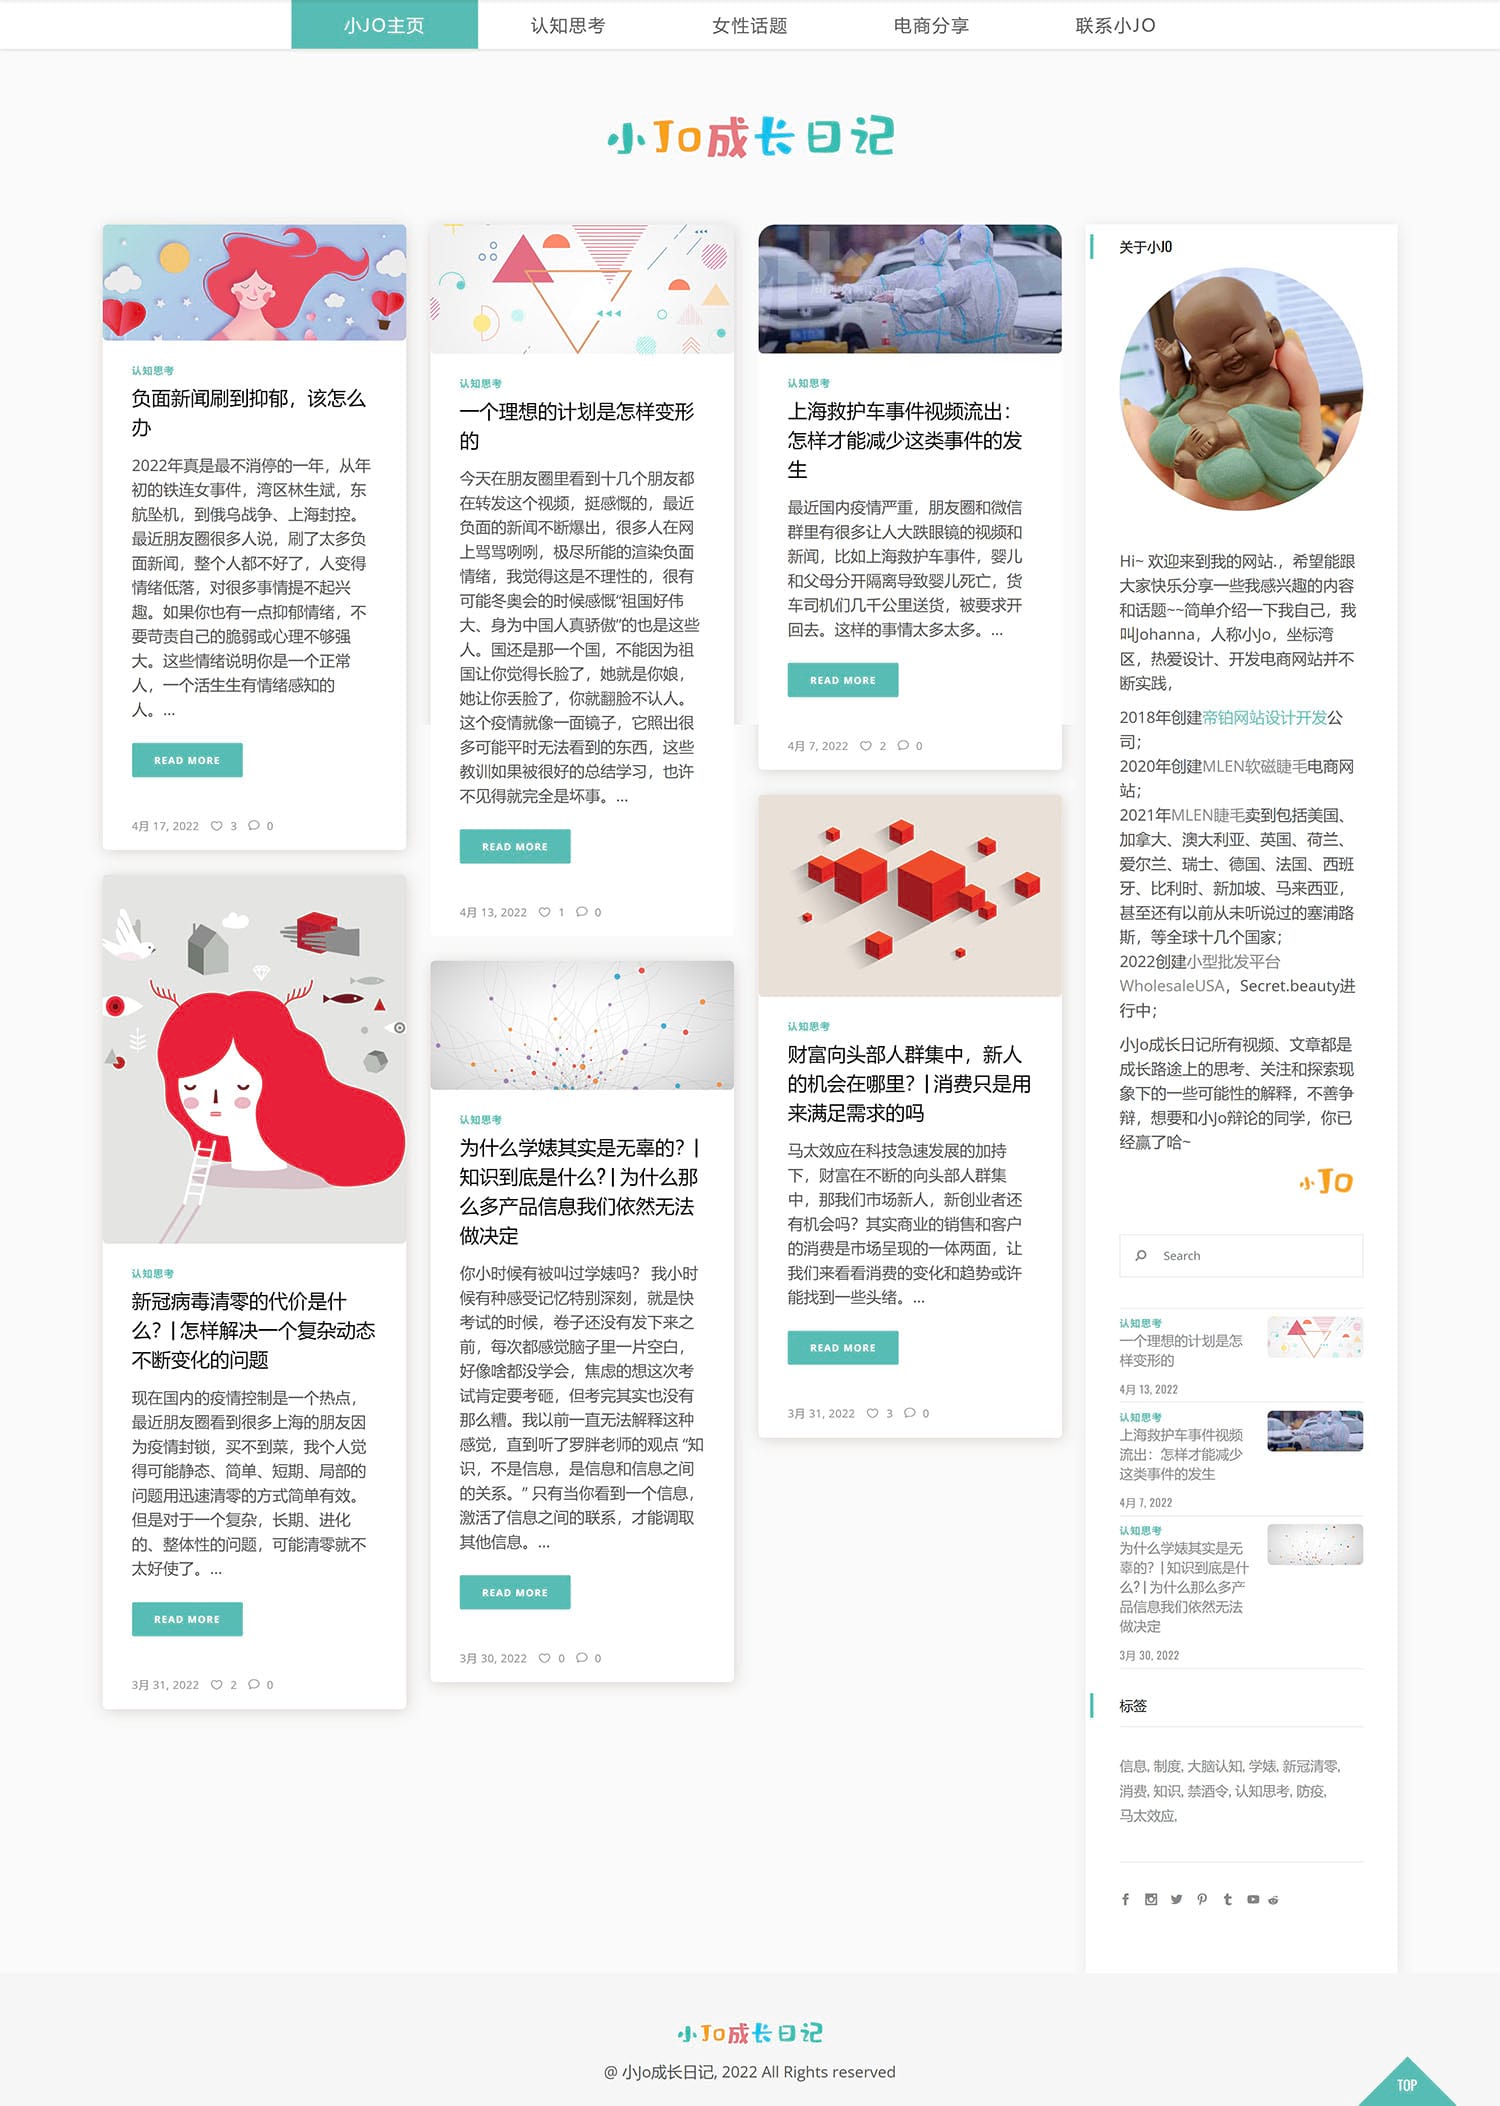 JoDiary 博客网站设计